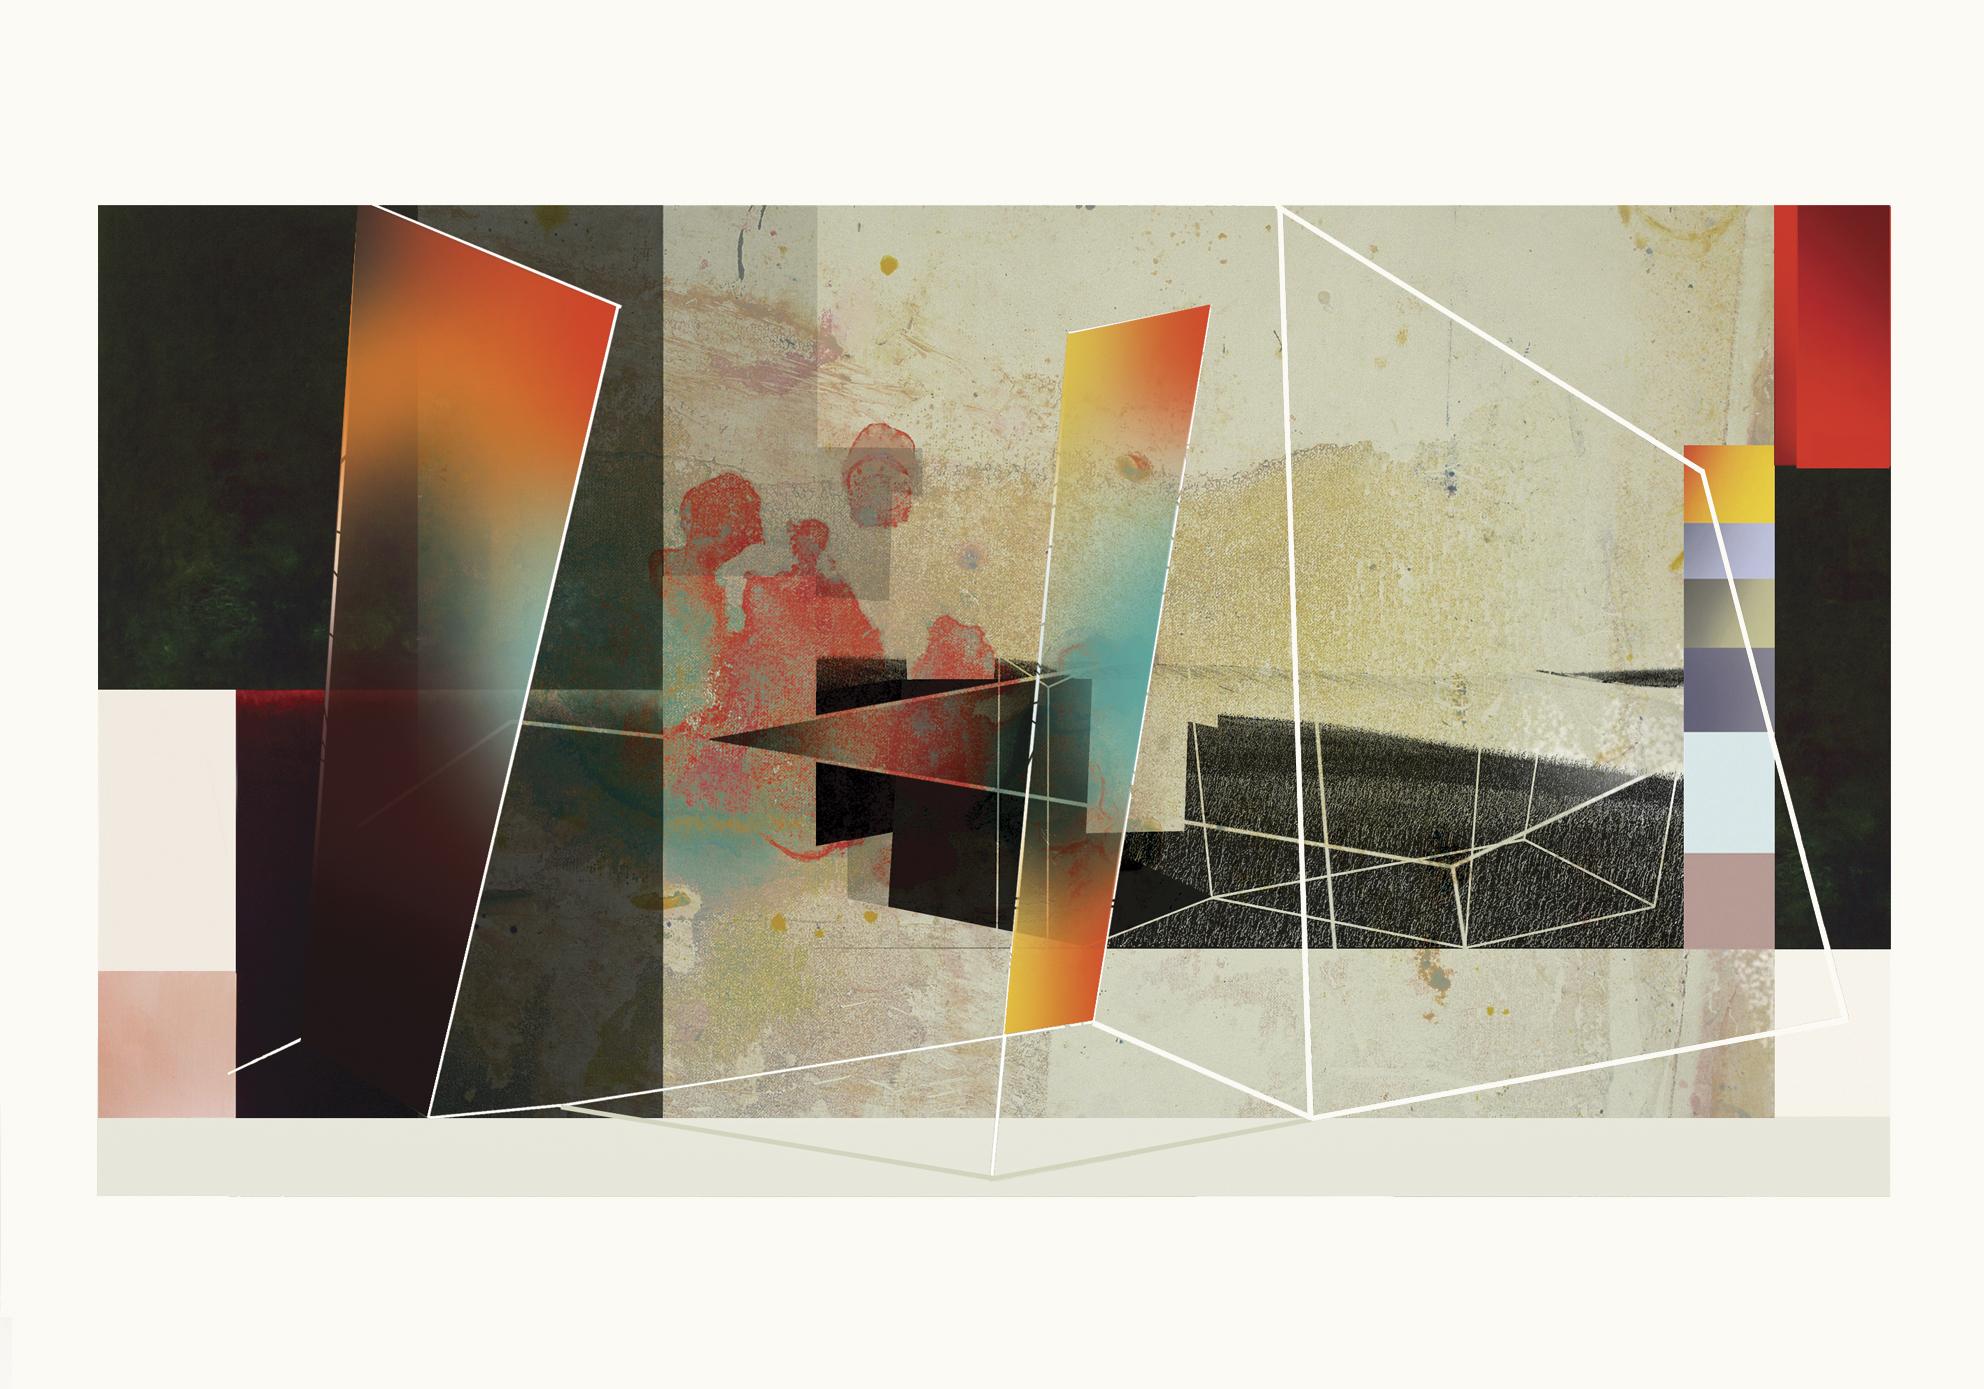 Casa 2 - Contemporary, Abstract, Pop art, Surrealist, geometric, landscape 